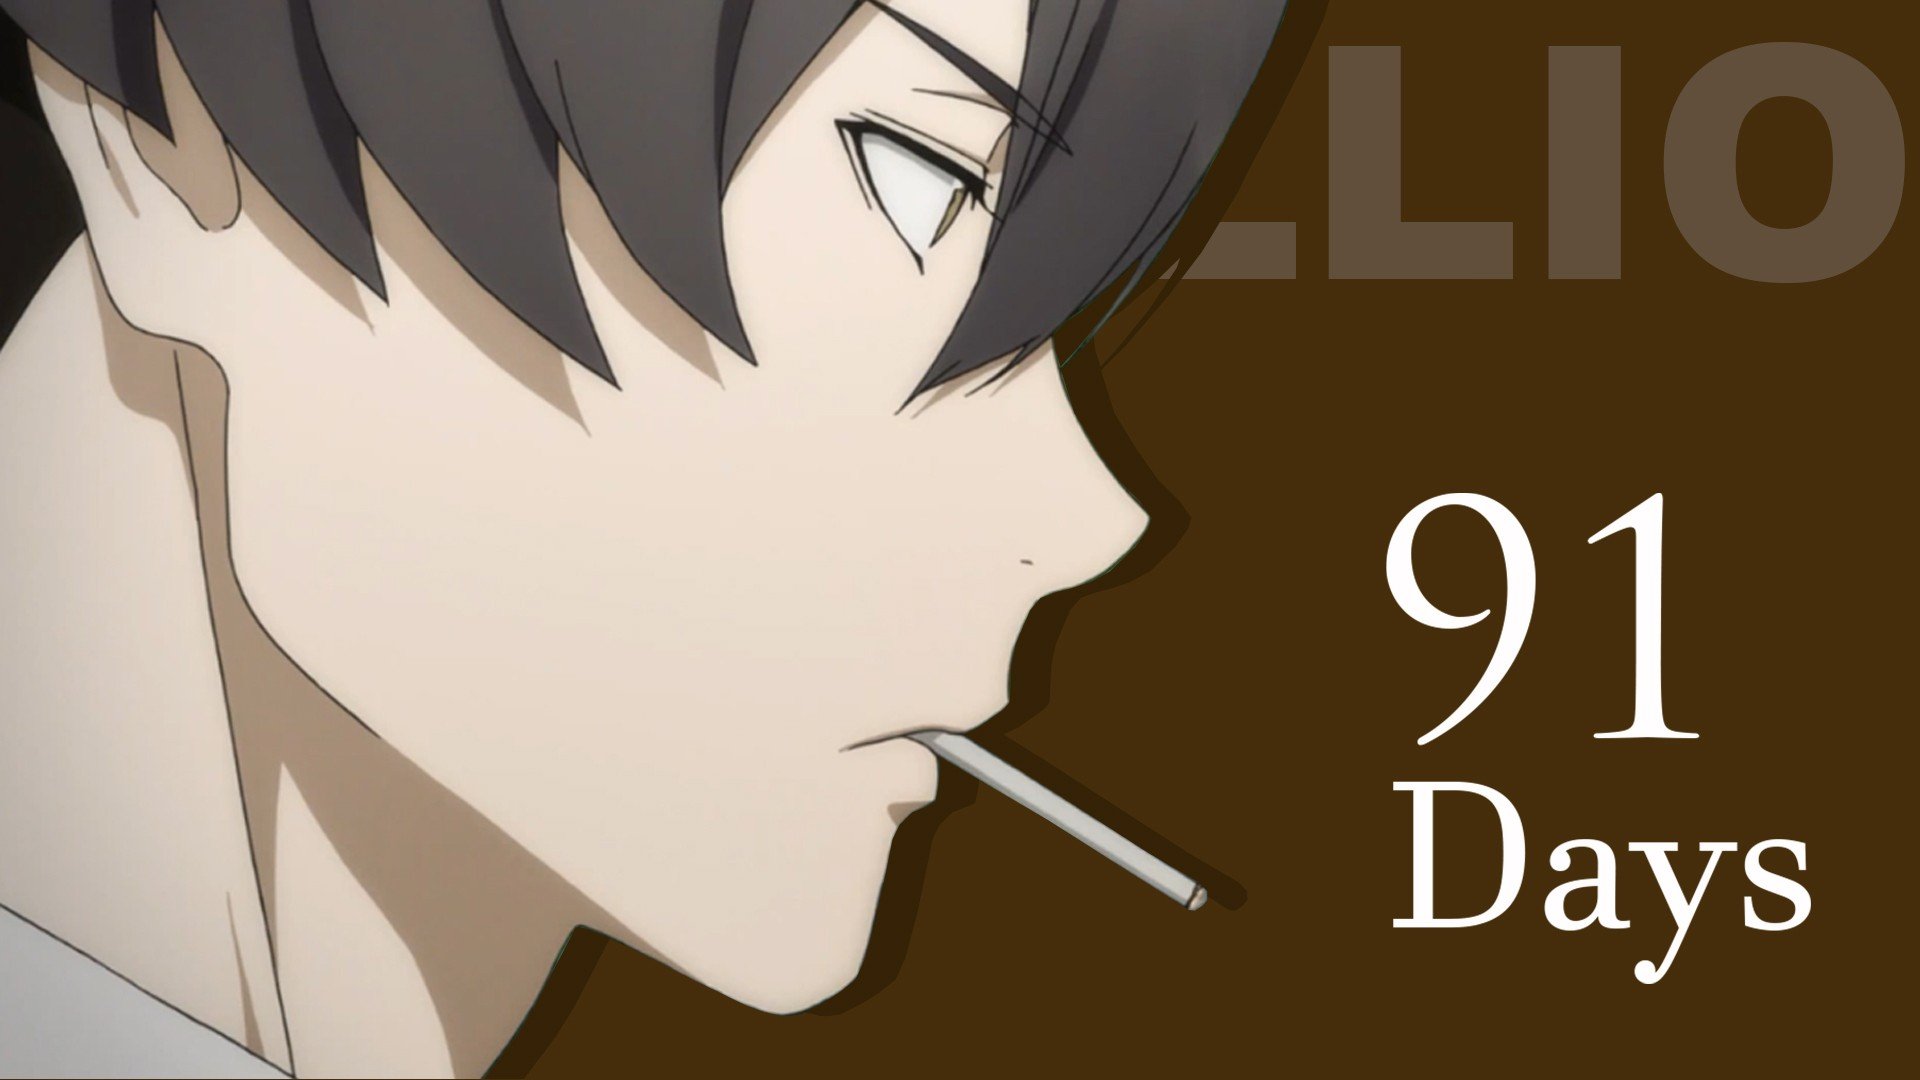 HD wallpaper: 91 Days, anime boys, Angelo Lagusa